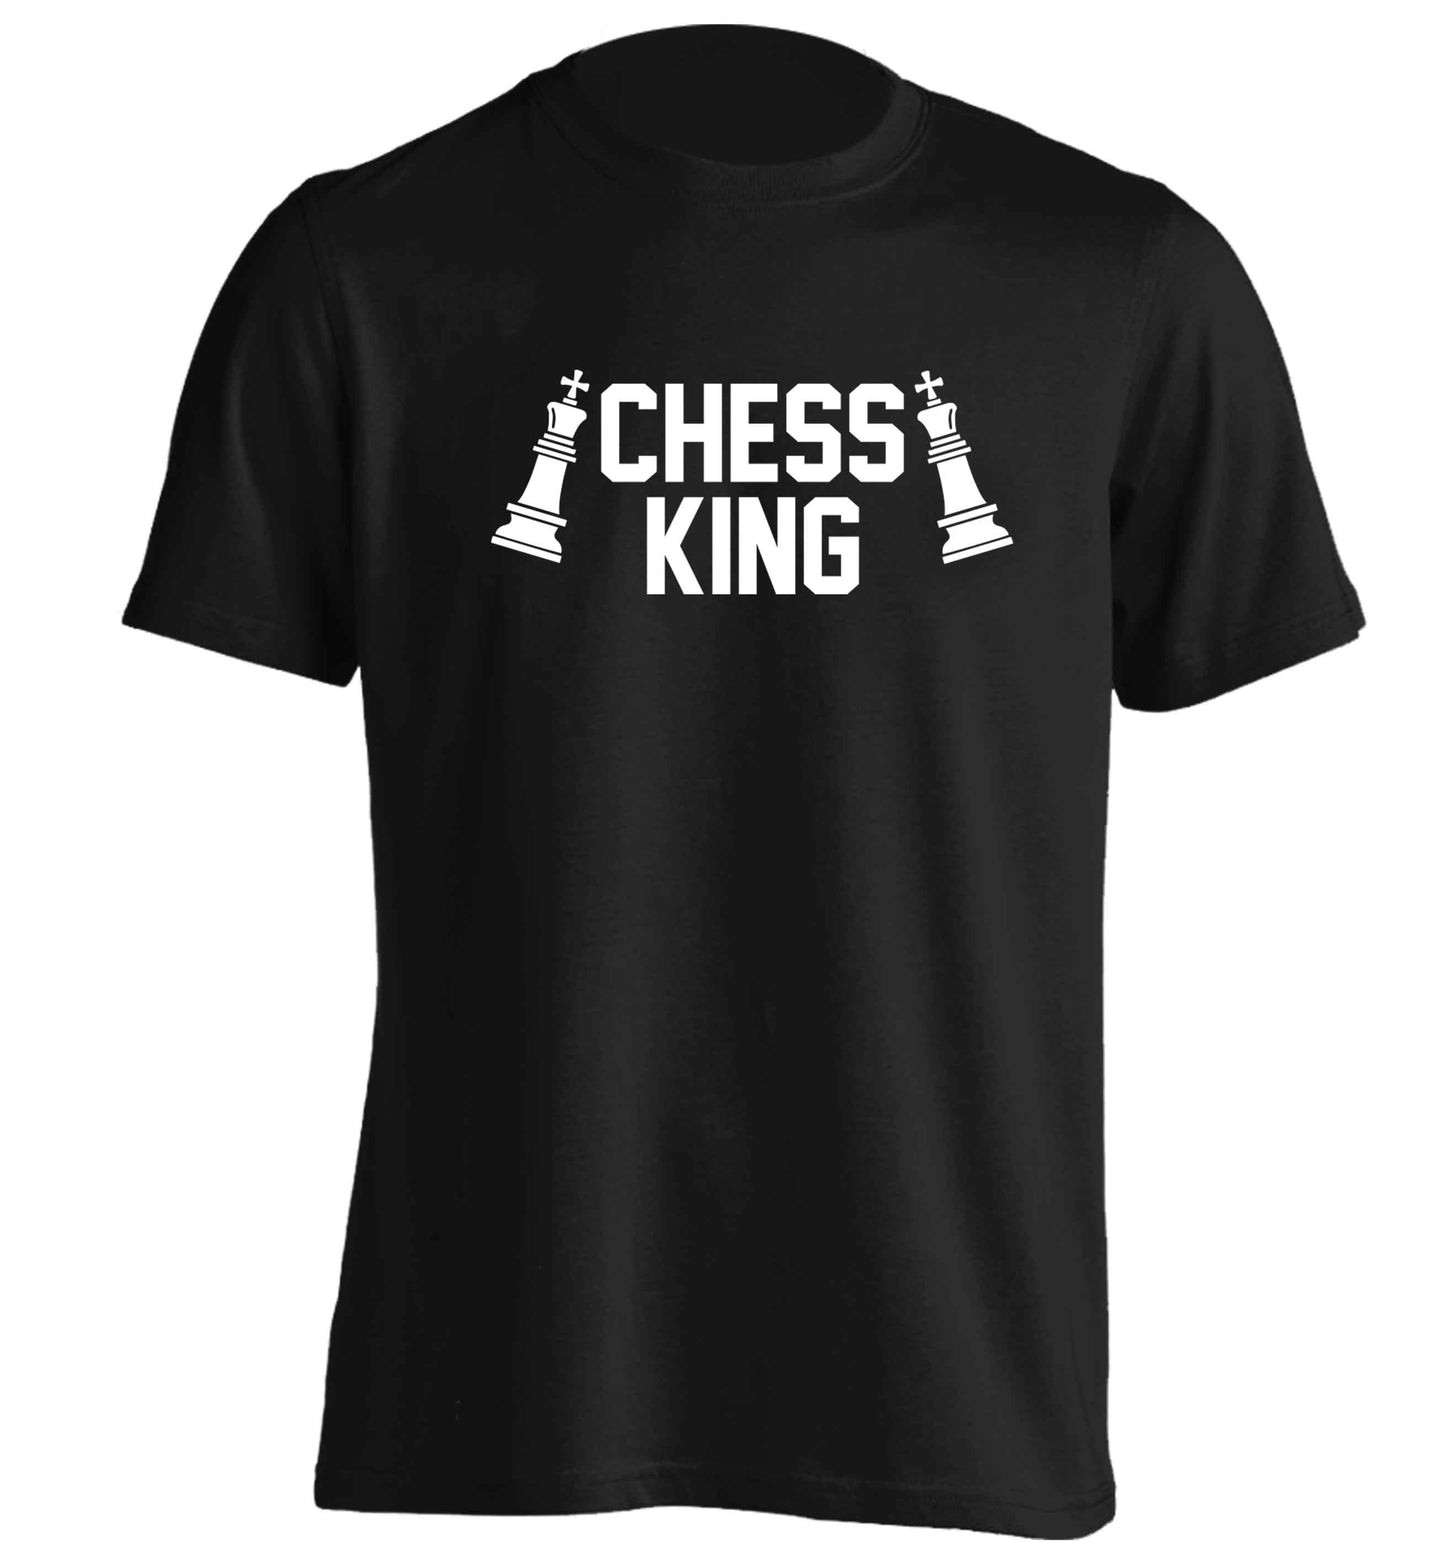 Chess king adults unisex black Tshirt 2XL